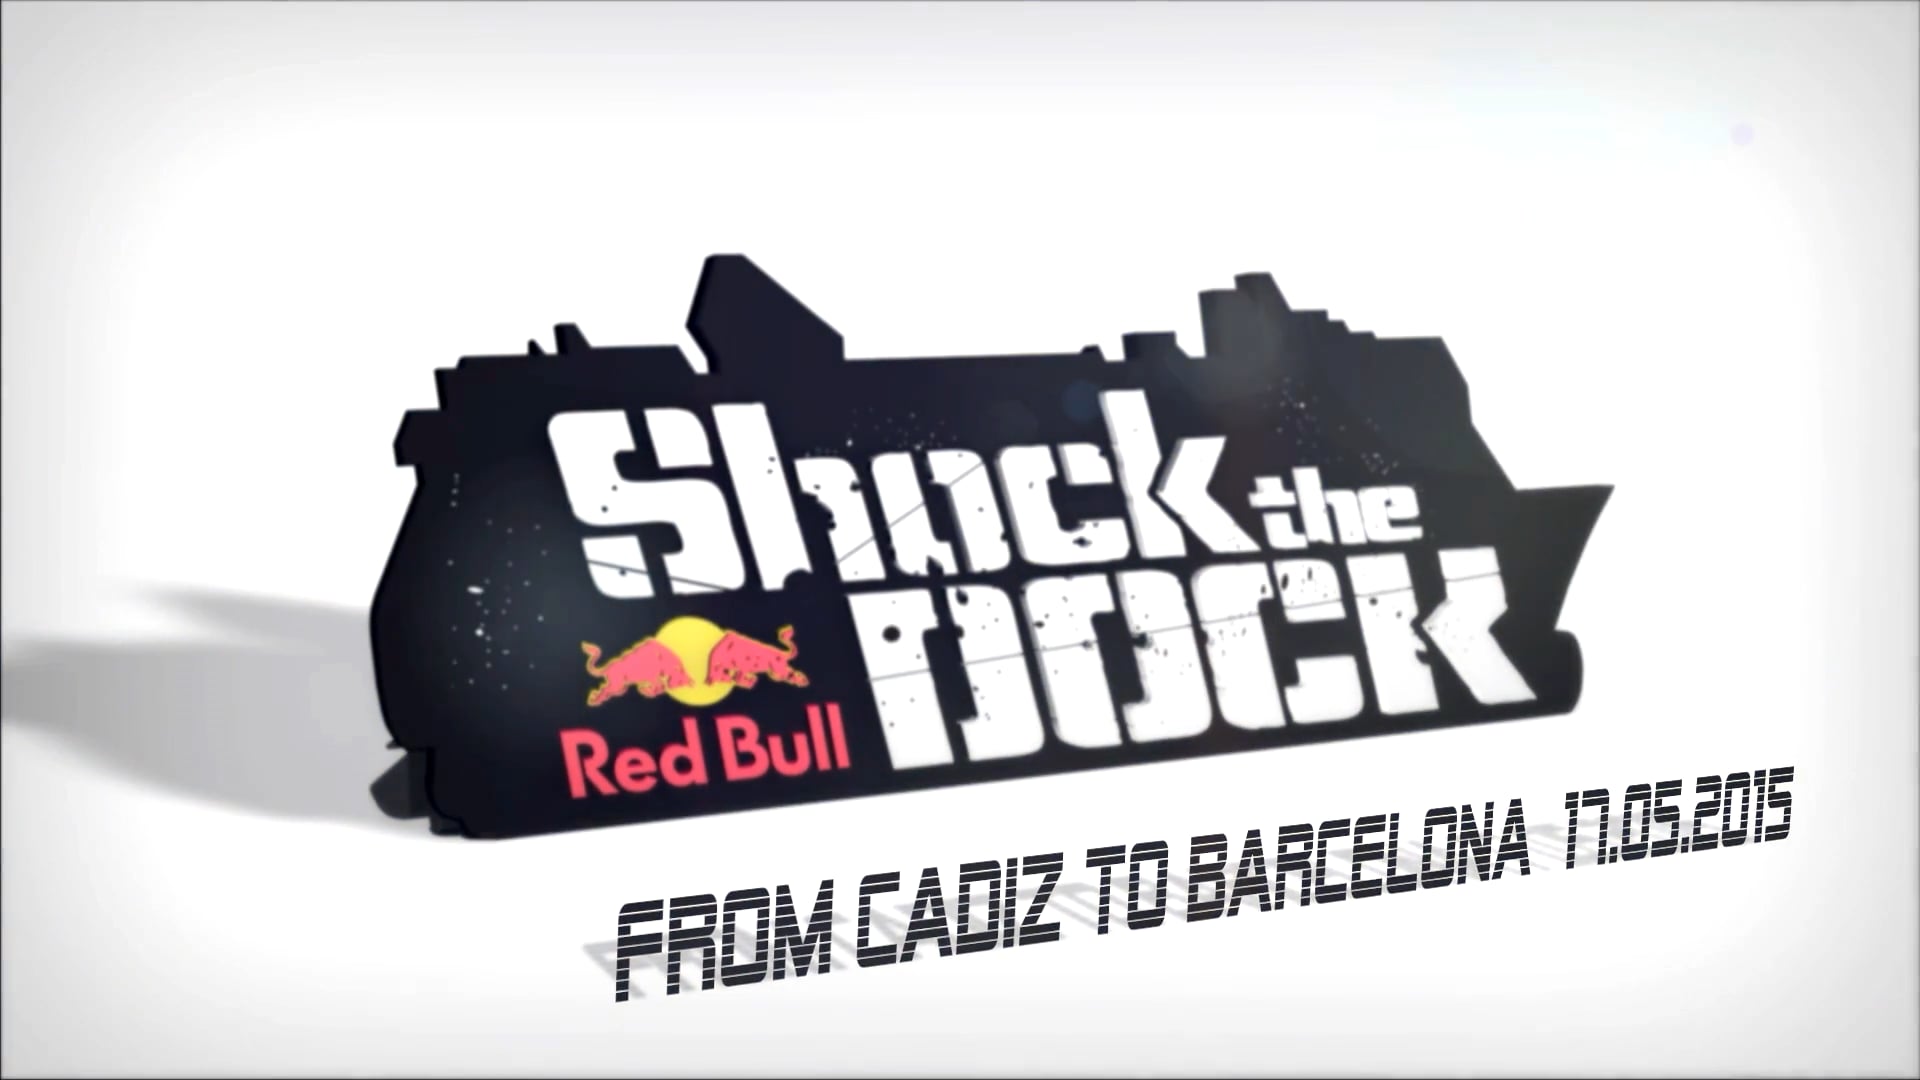 Red Bull Shock the Dock